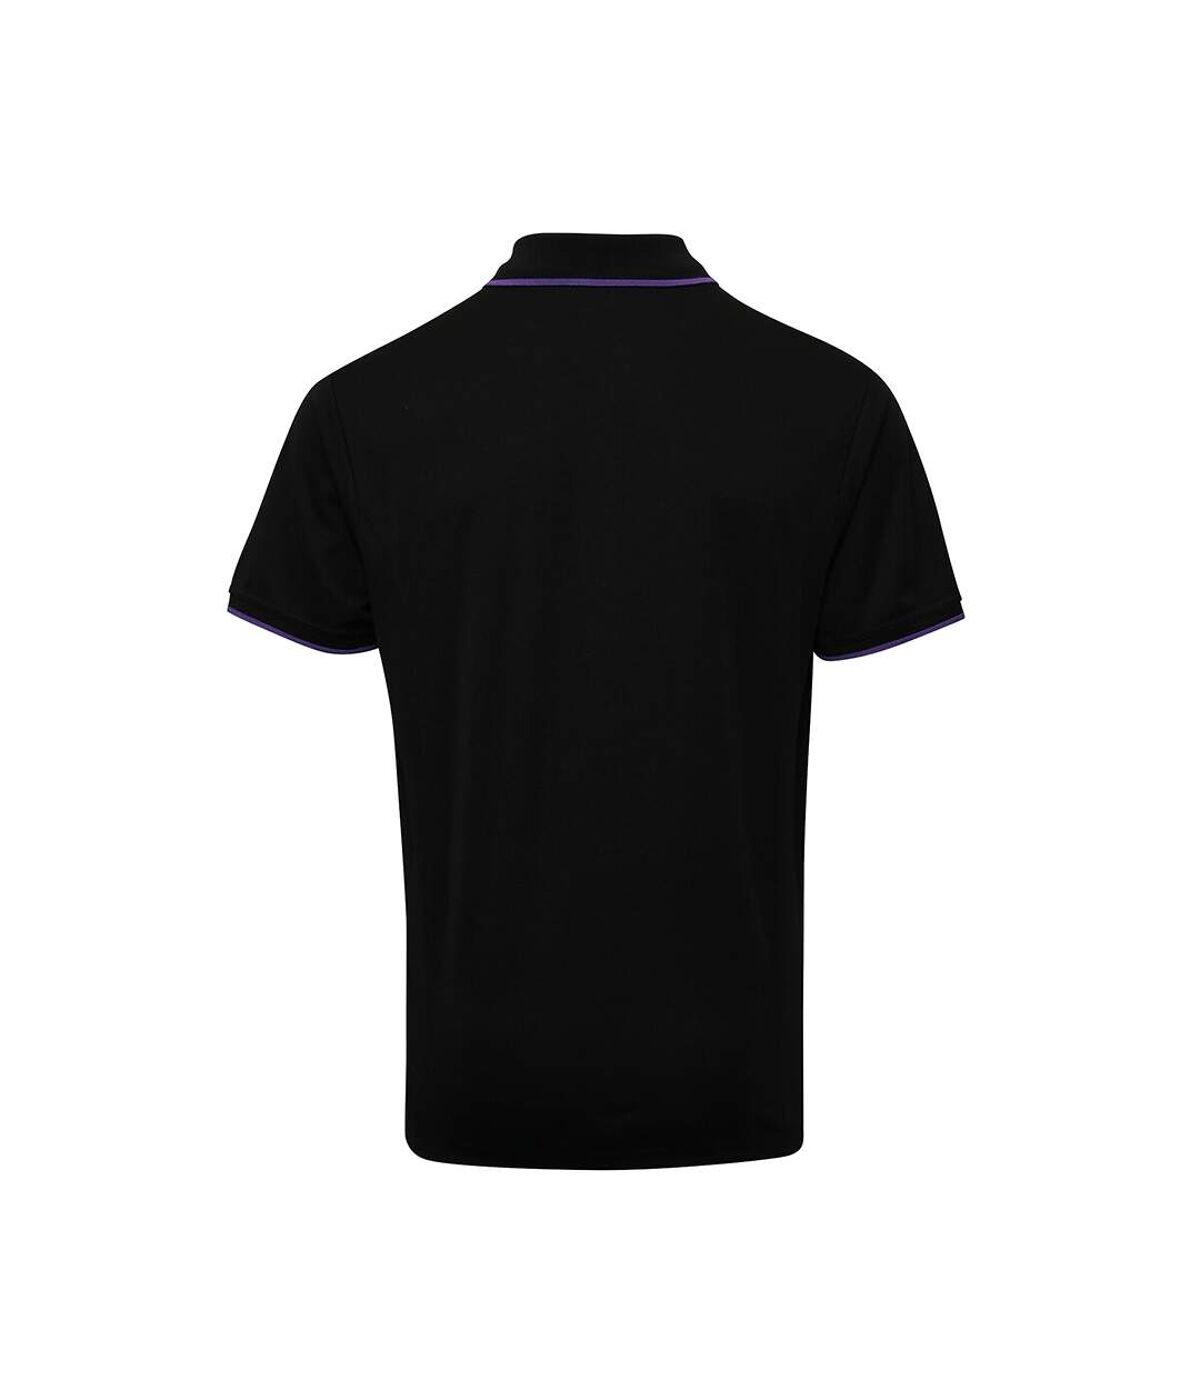 Premier Mens Contrast Coolchecker Polo Shirt (Black/Purple)